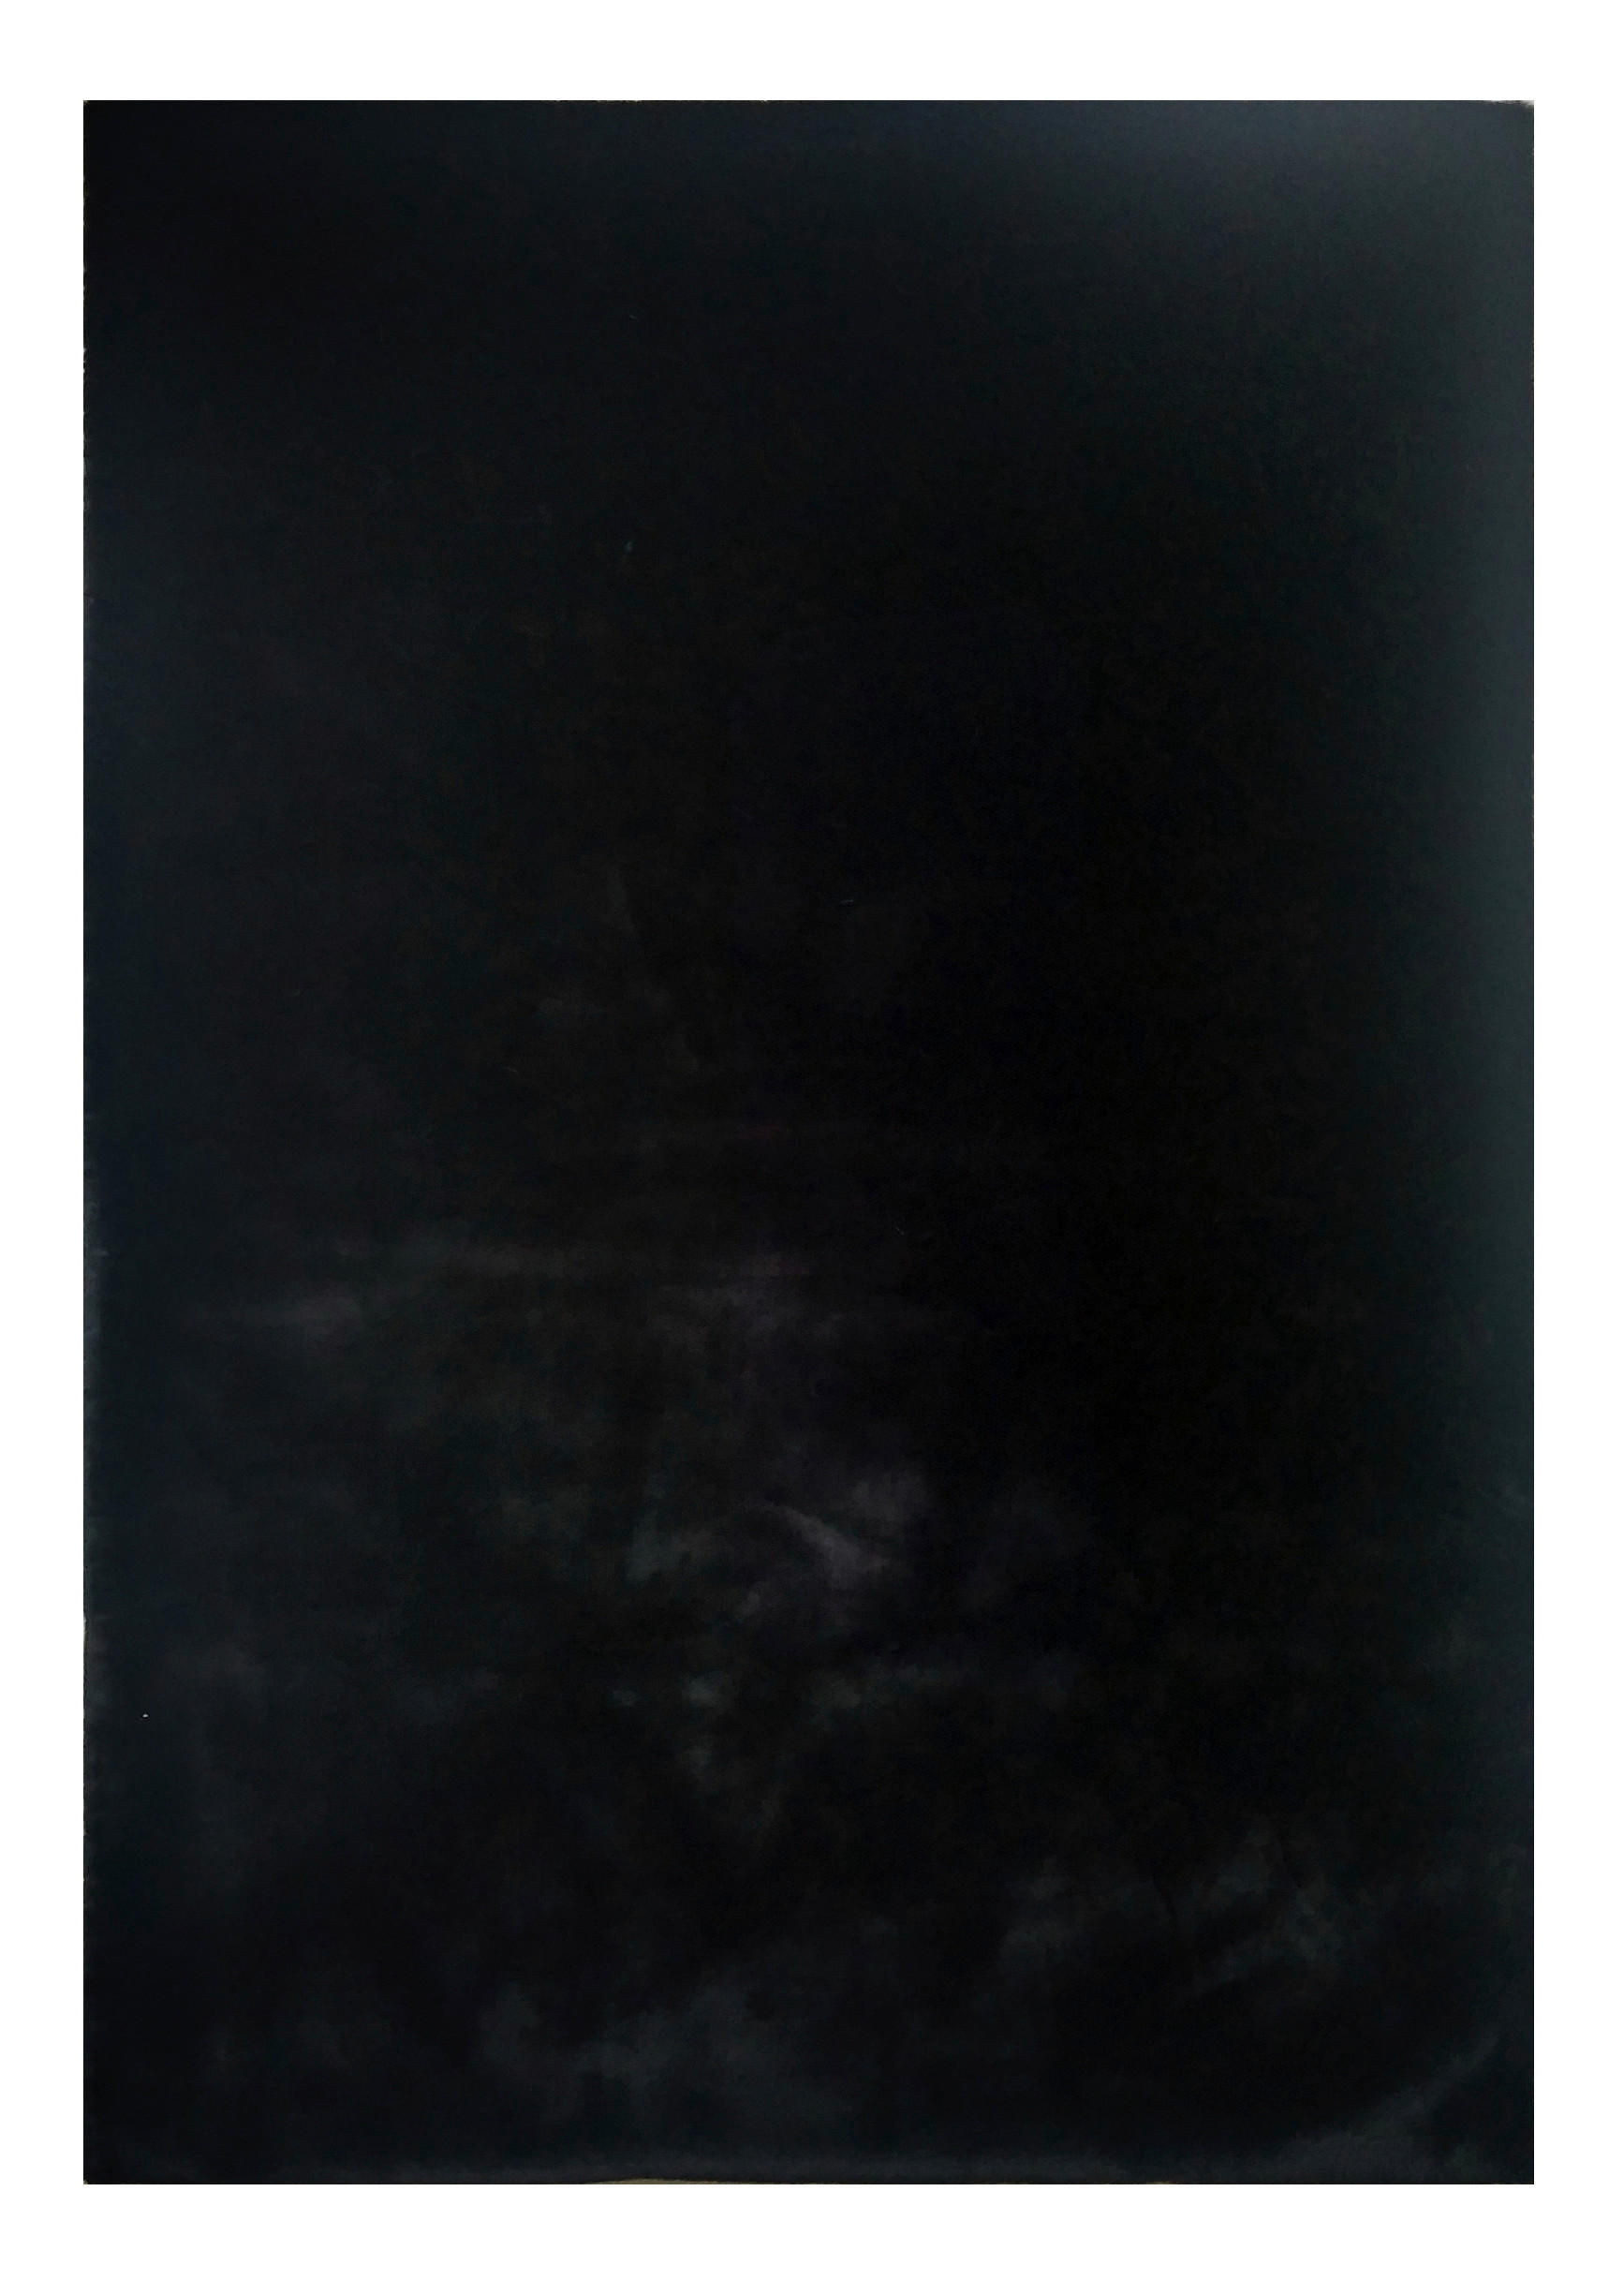 RYAMATTA  - svart, Trend, textil (70/130cm) - Novel